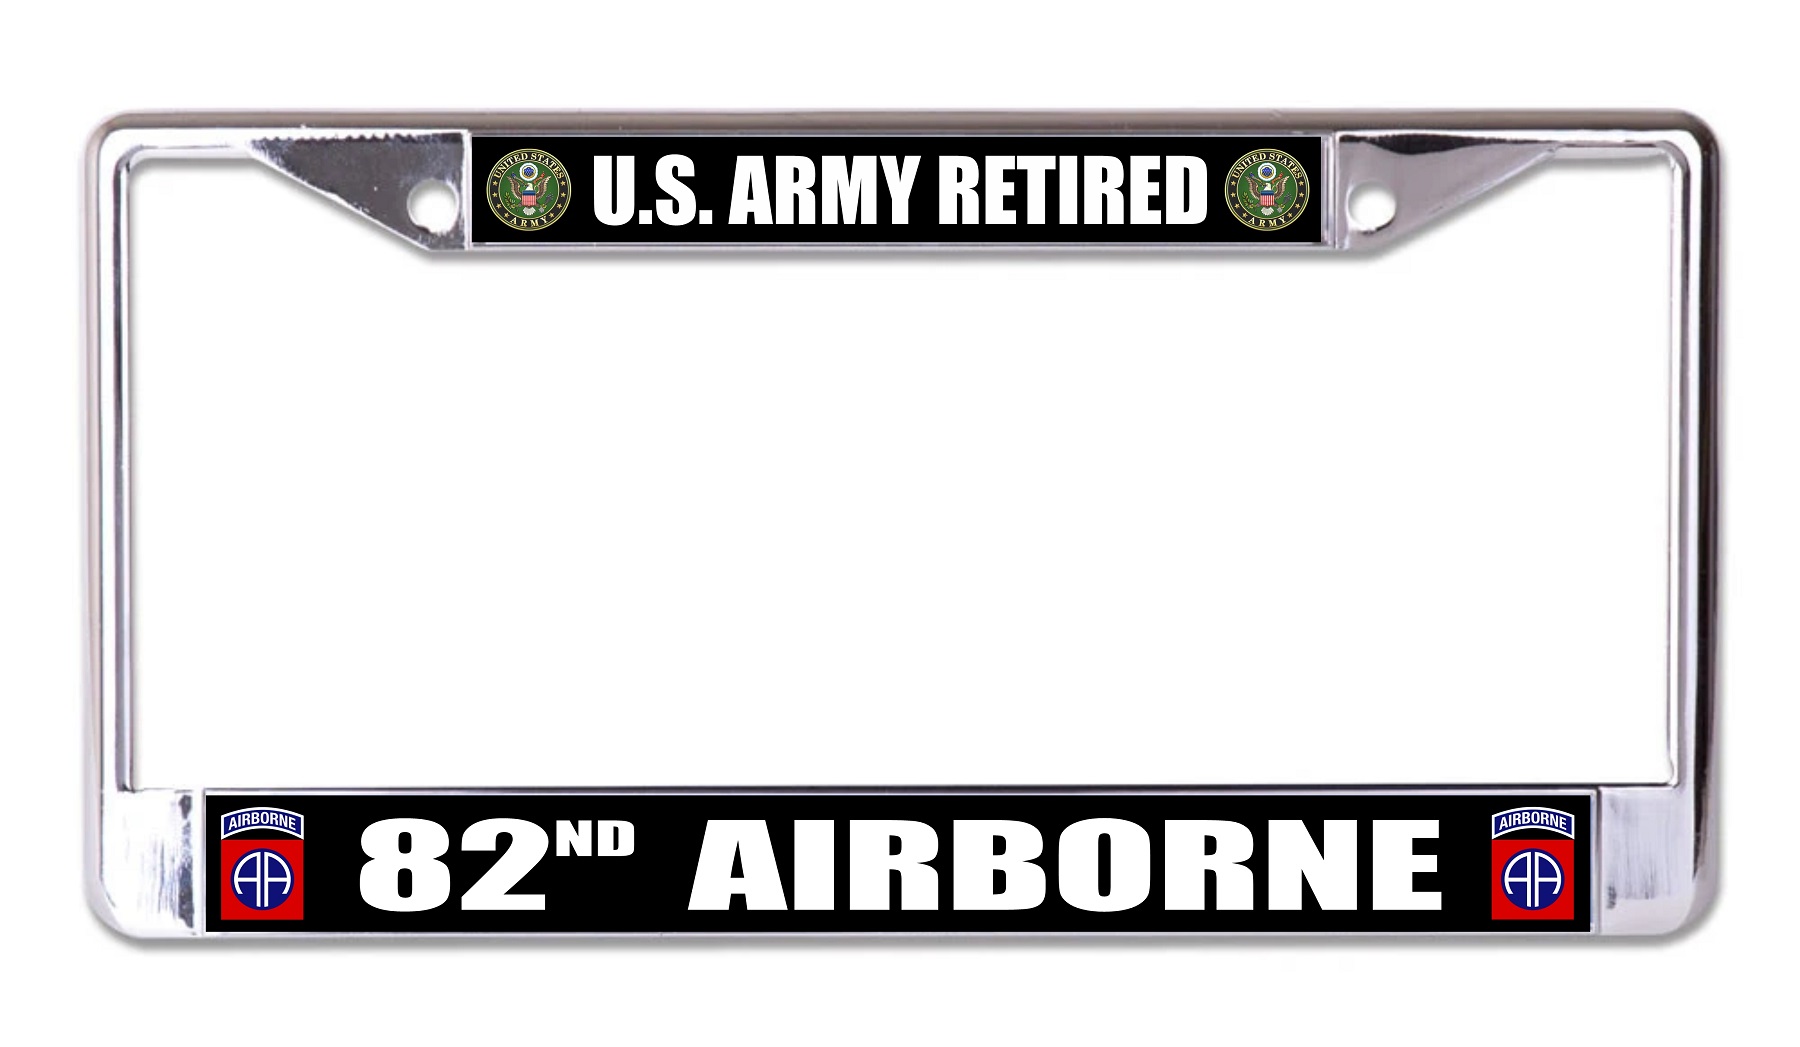 U.S. Army Retired 82nd Airborne Chrome License Plate FRAME